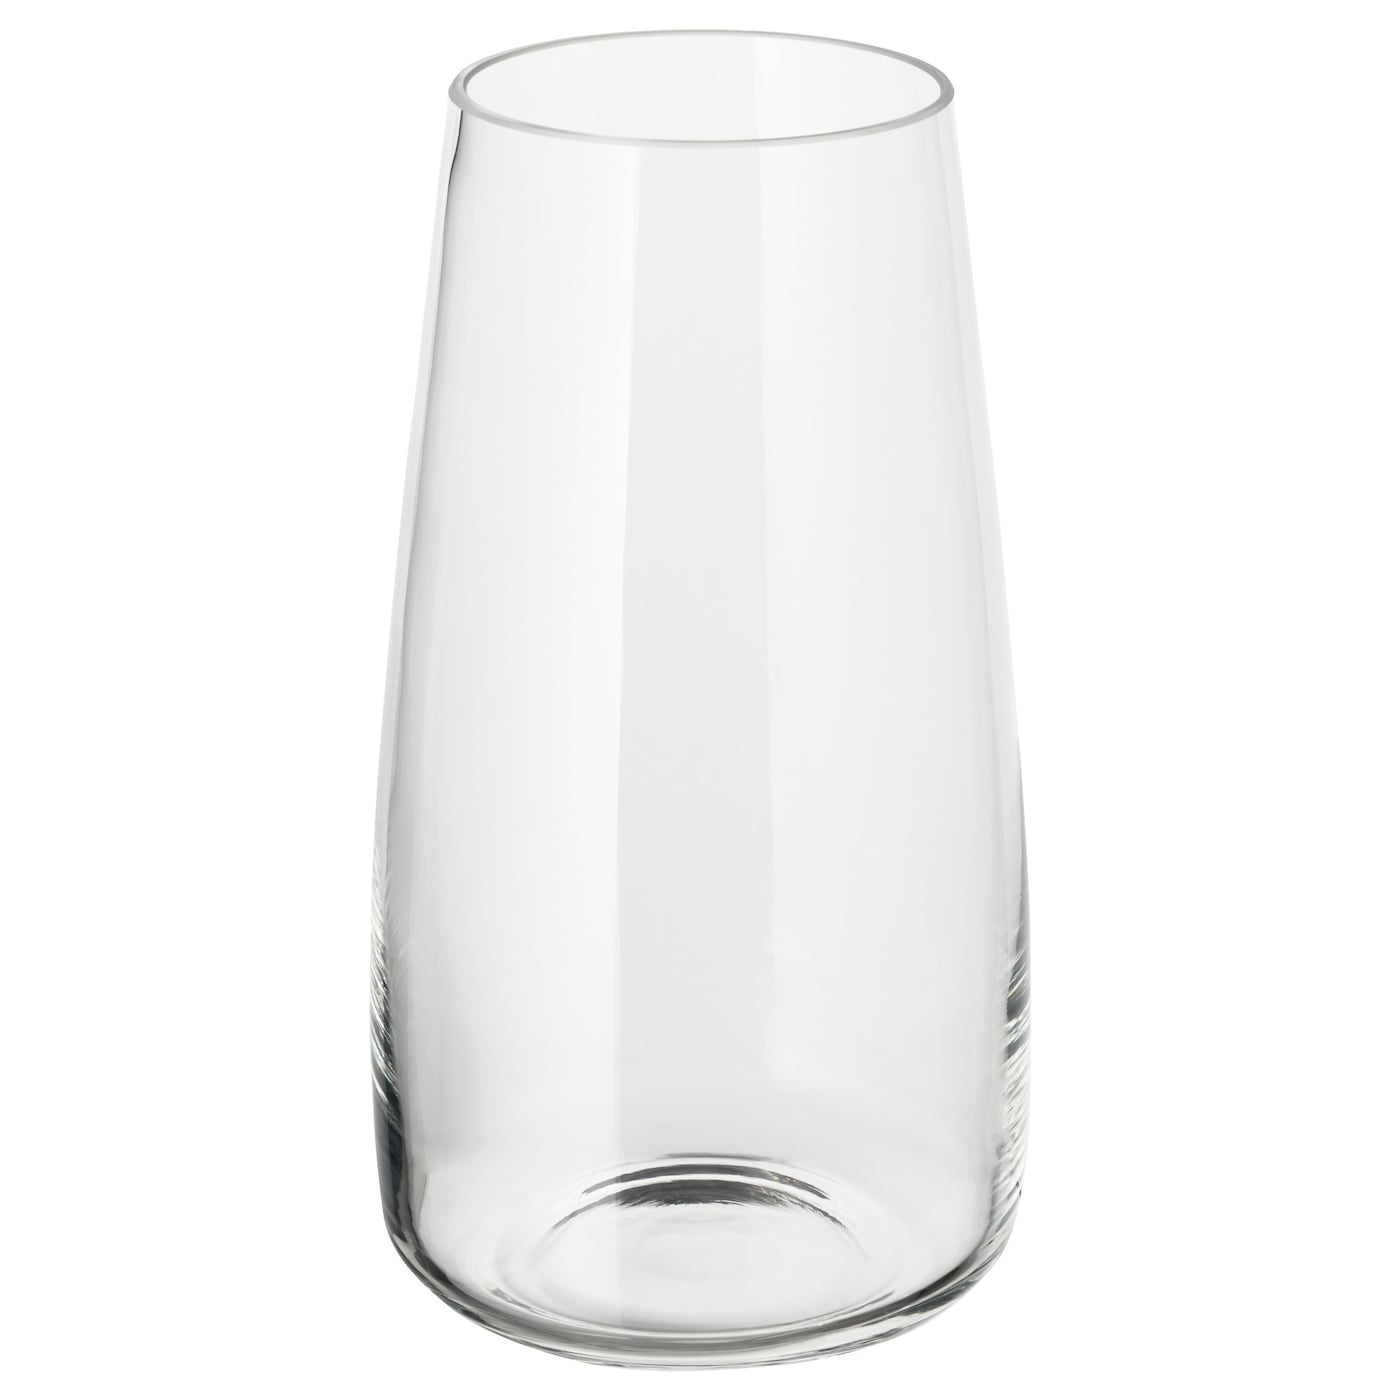 BERÄKNA БЕРЭКНА Ваза, прозрачное стекло, 30 см IKEA ваза для цветов грация 8 марта